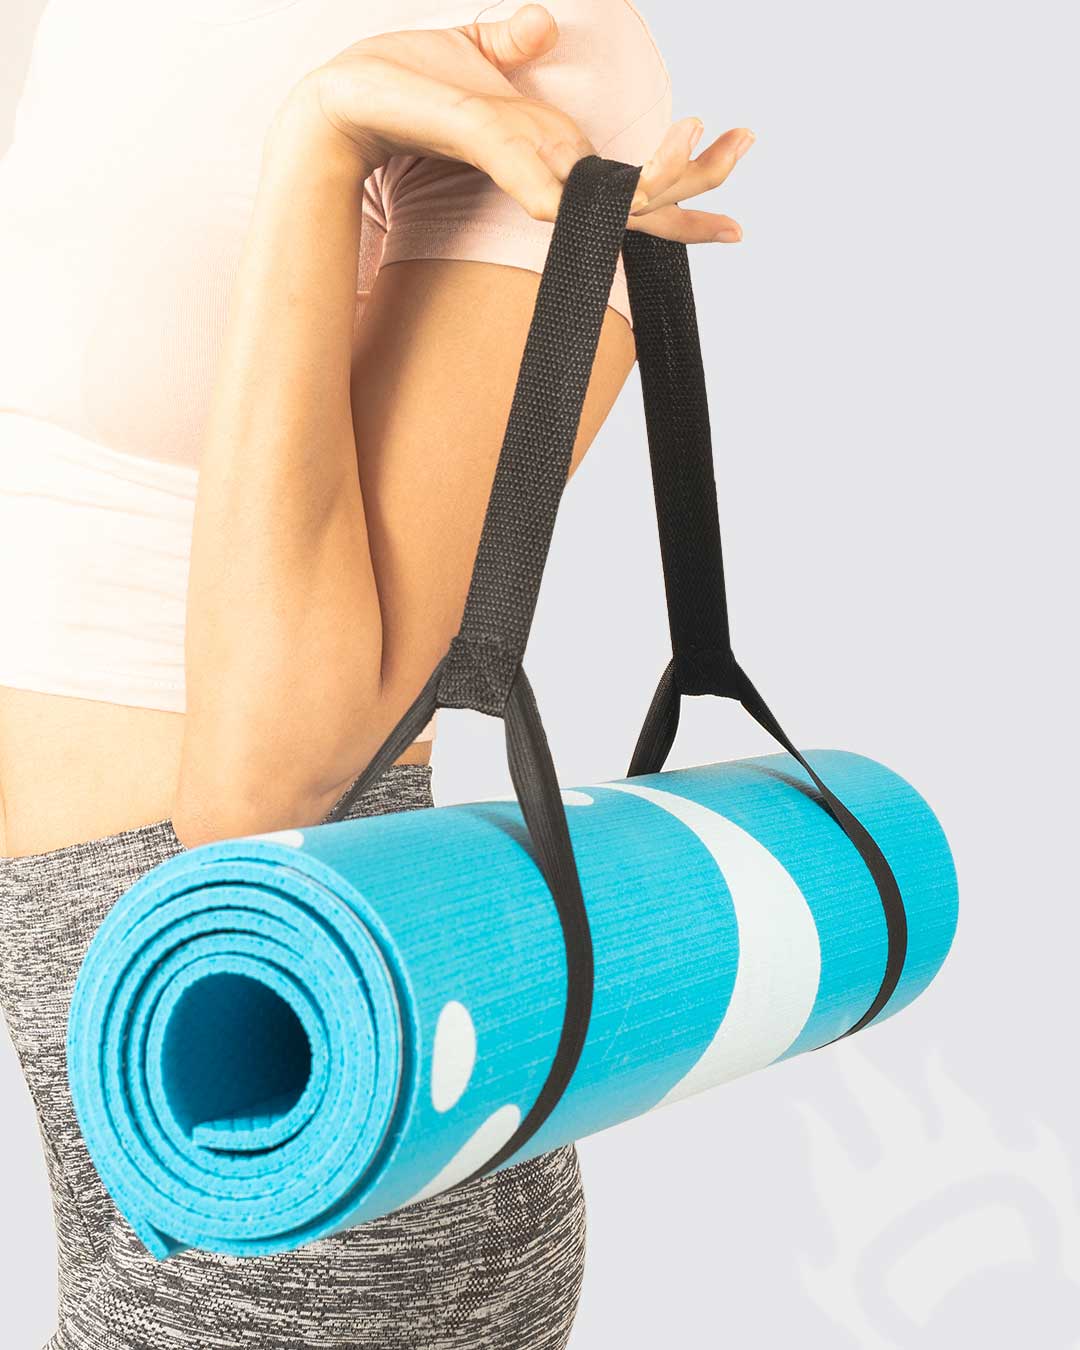 DIWANG Non-Slip Fitness Yoga Mat, Sports Camping Rest Yoga Aids